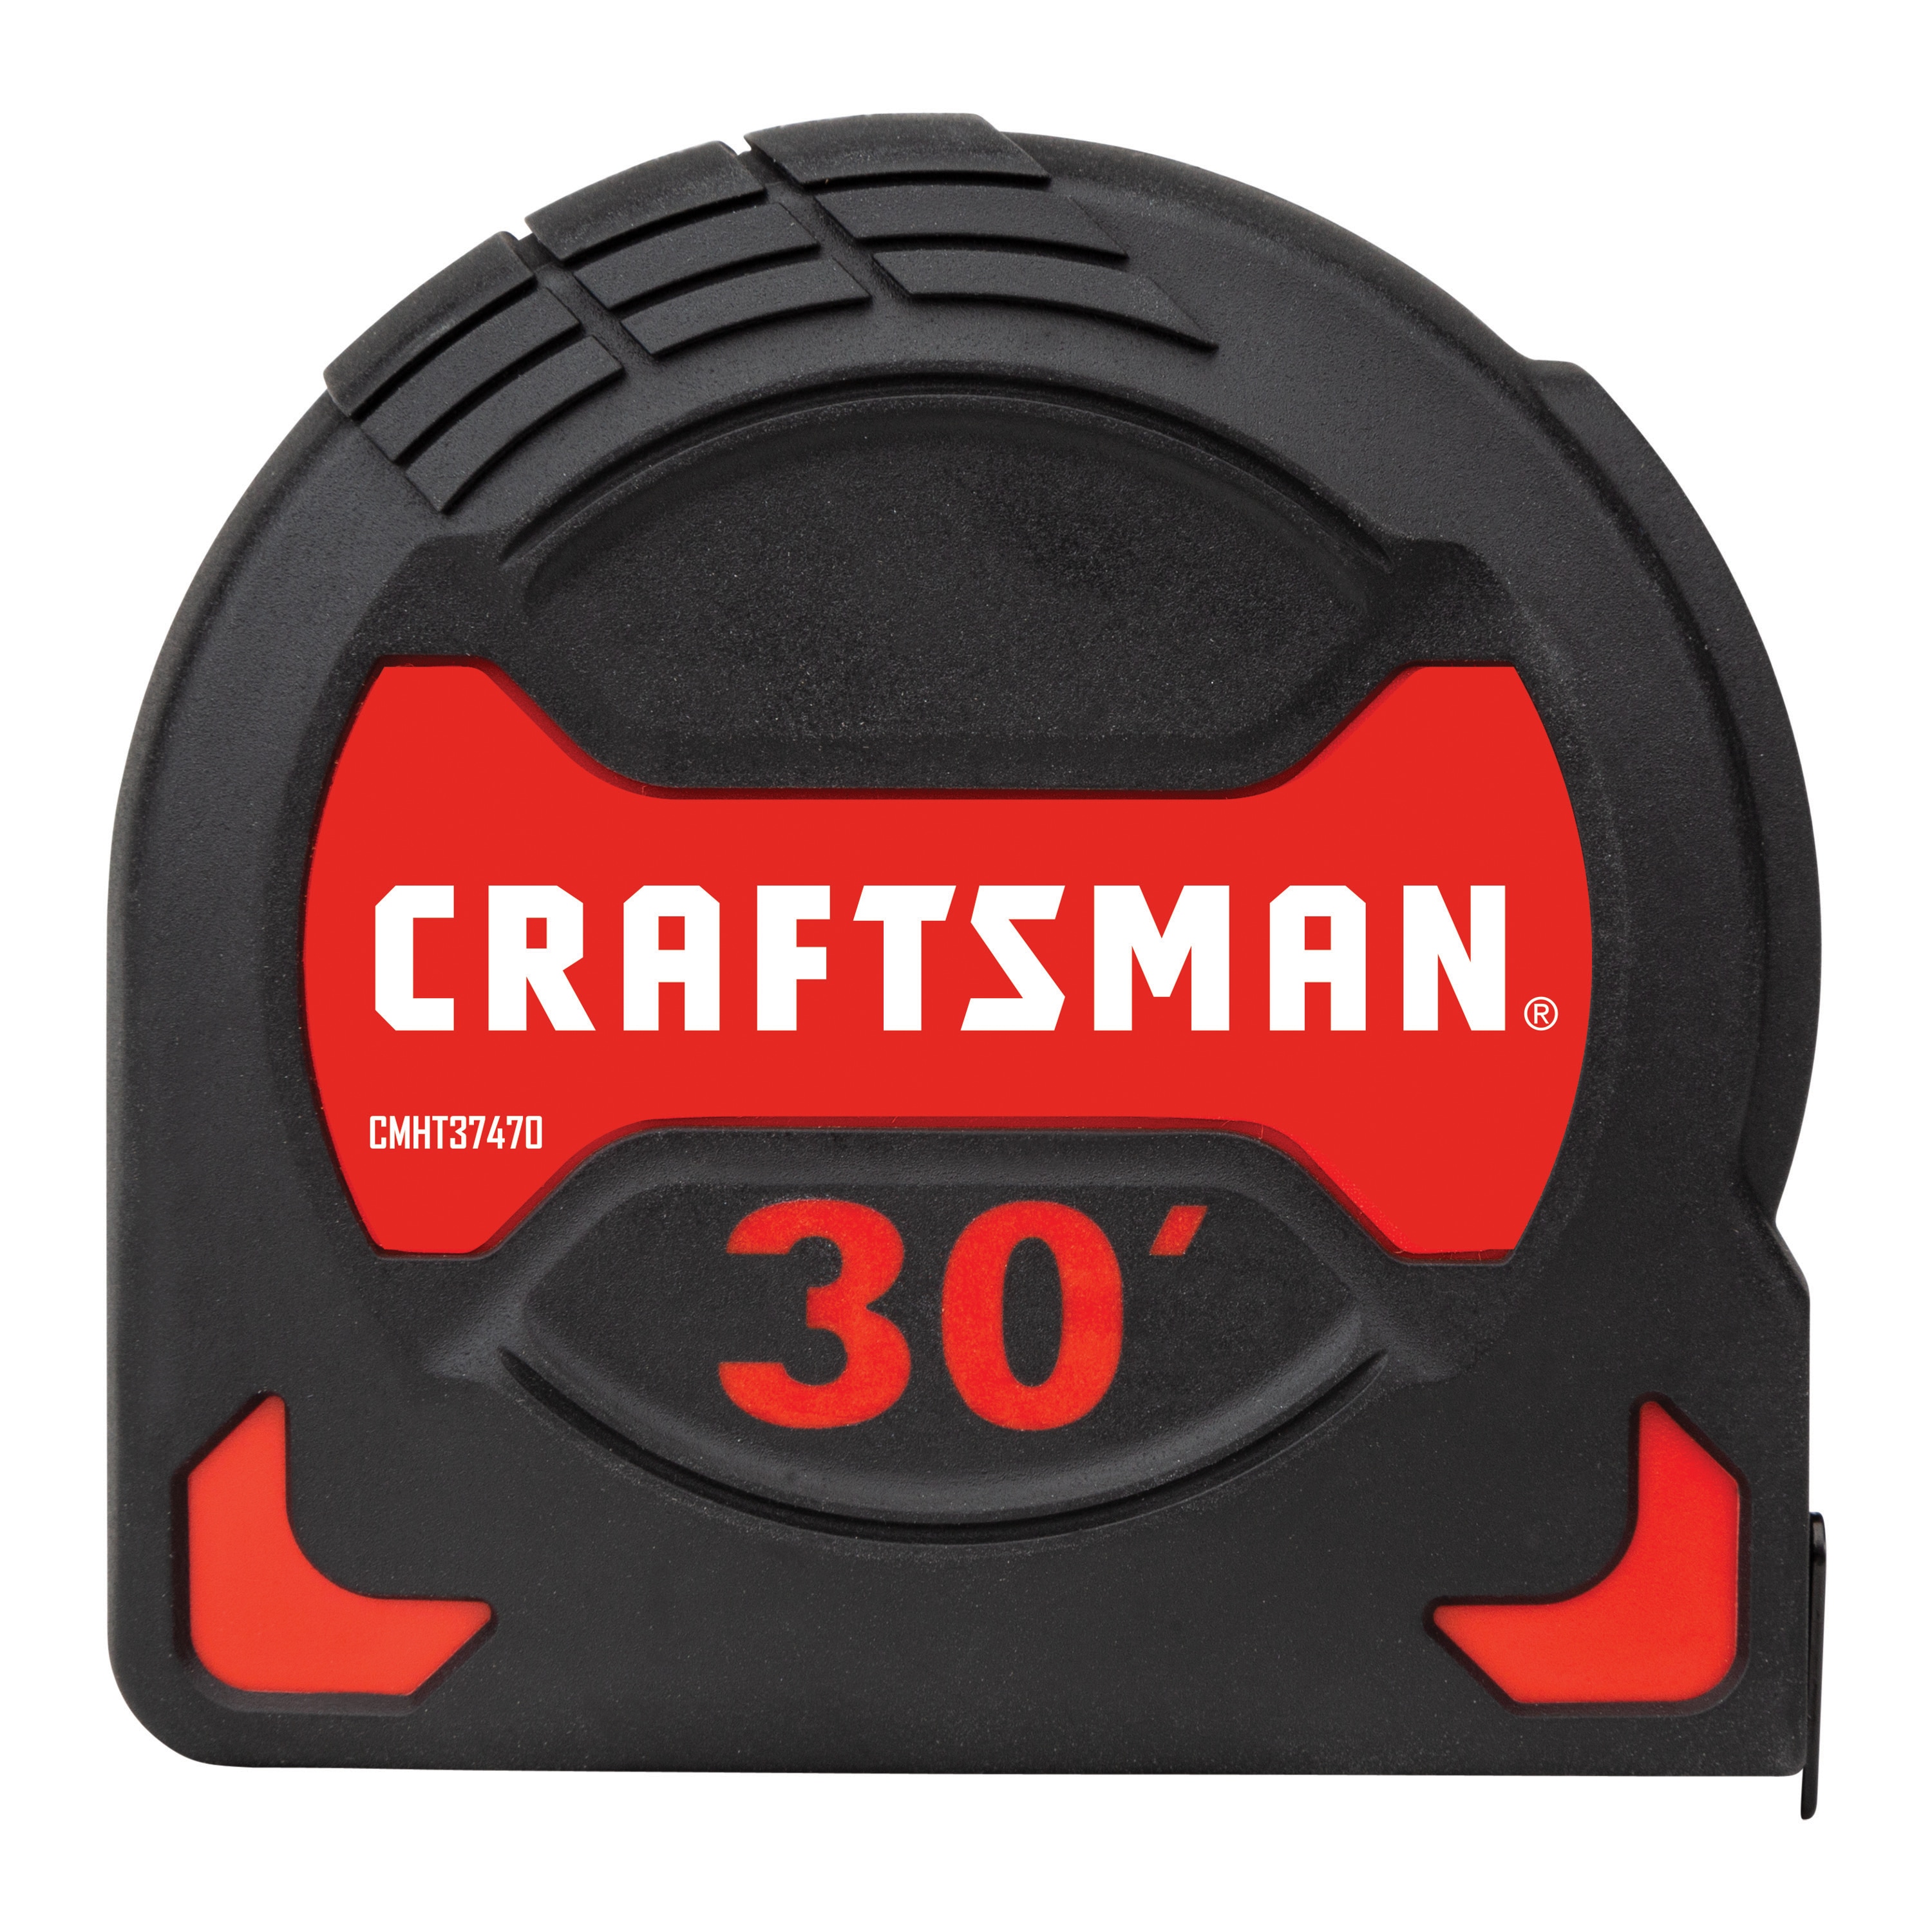 Craftsman Sidewinder Tape Measure Review 